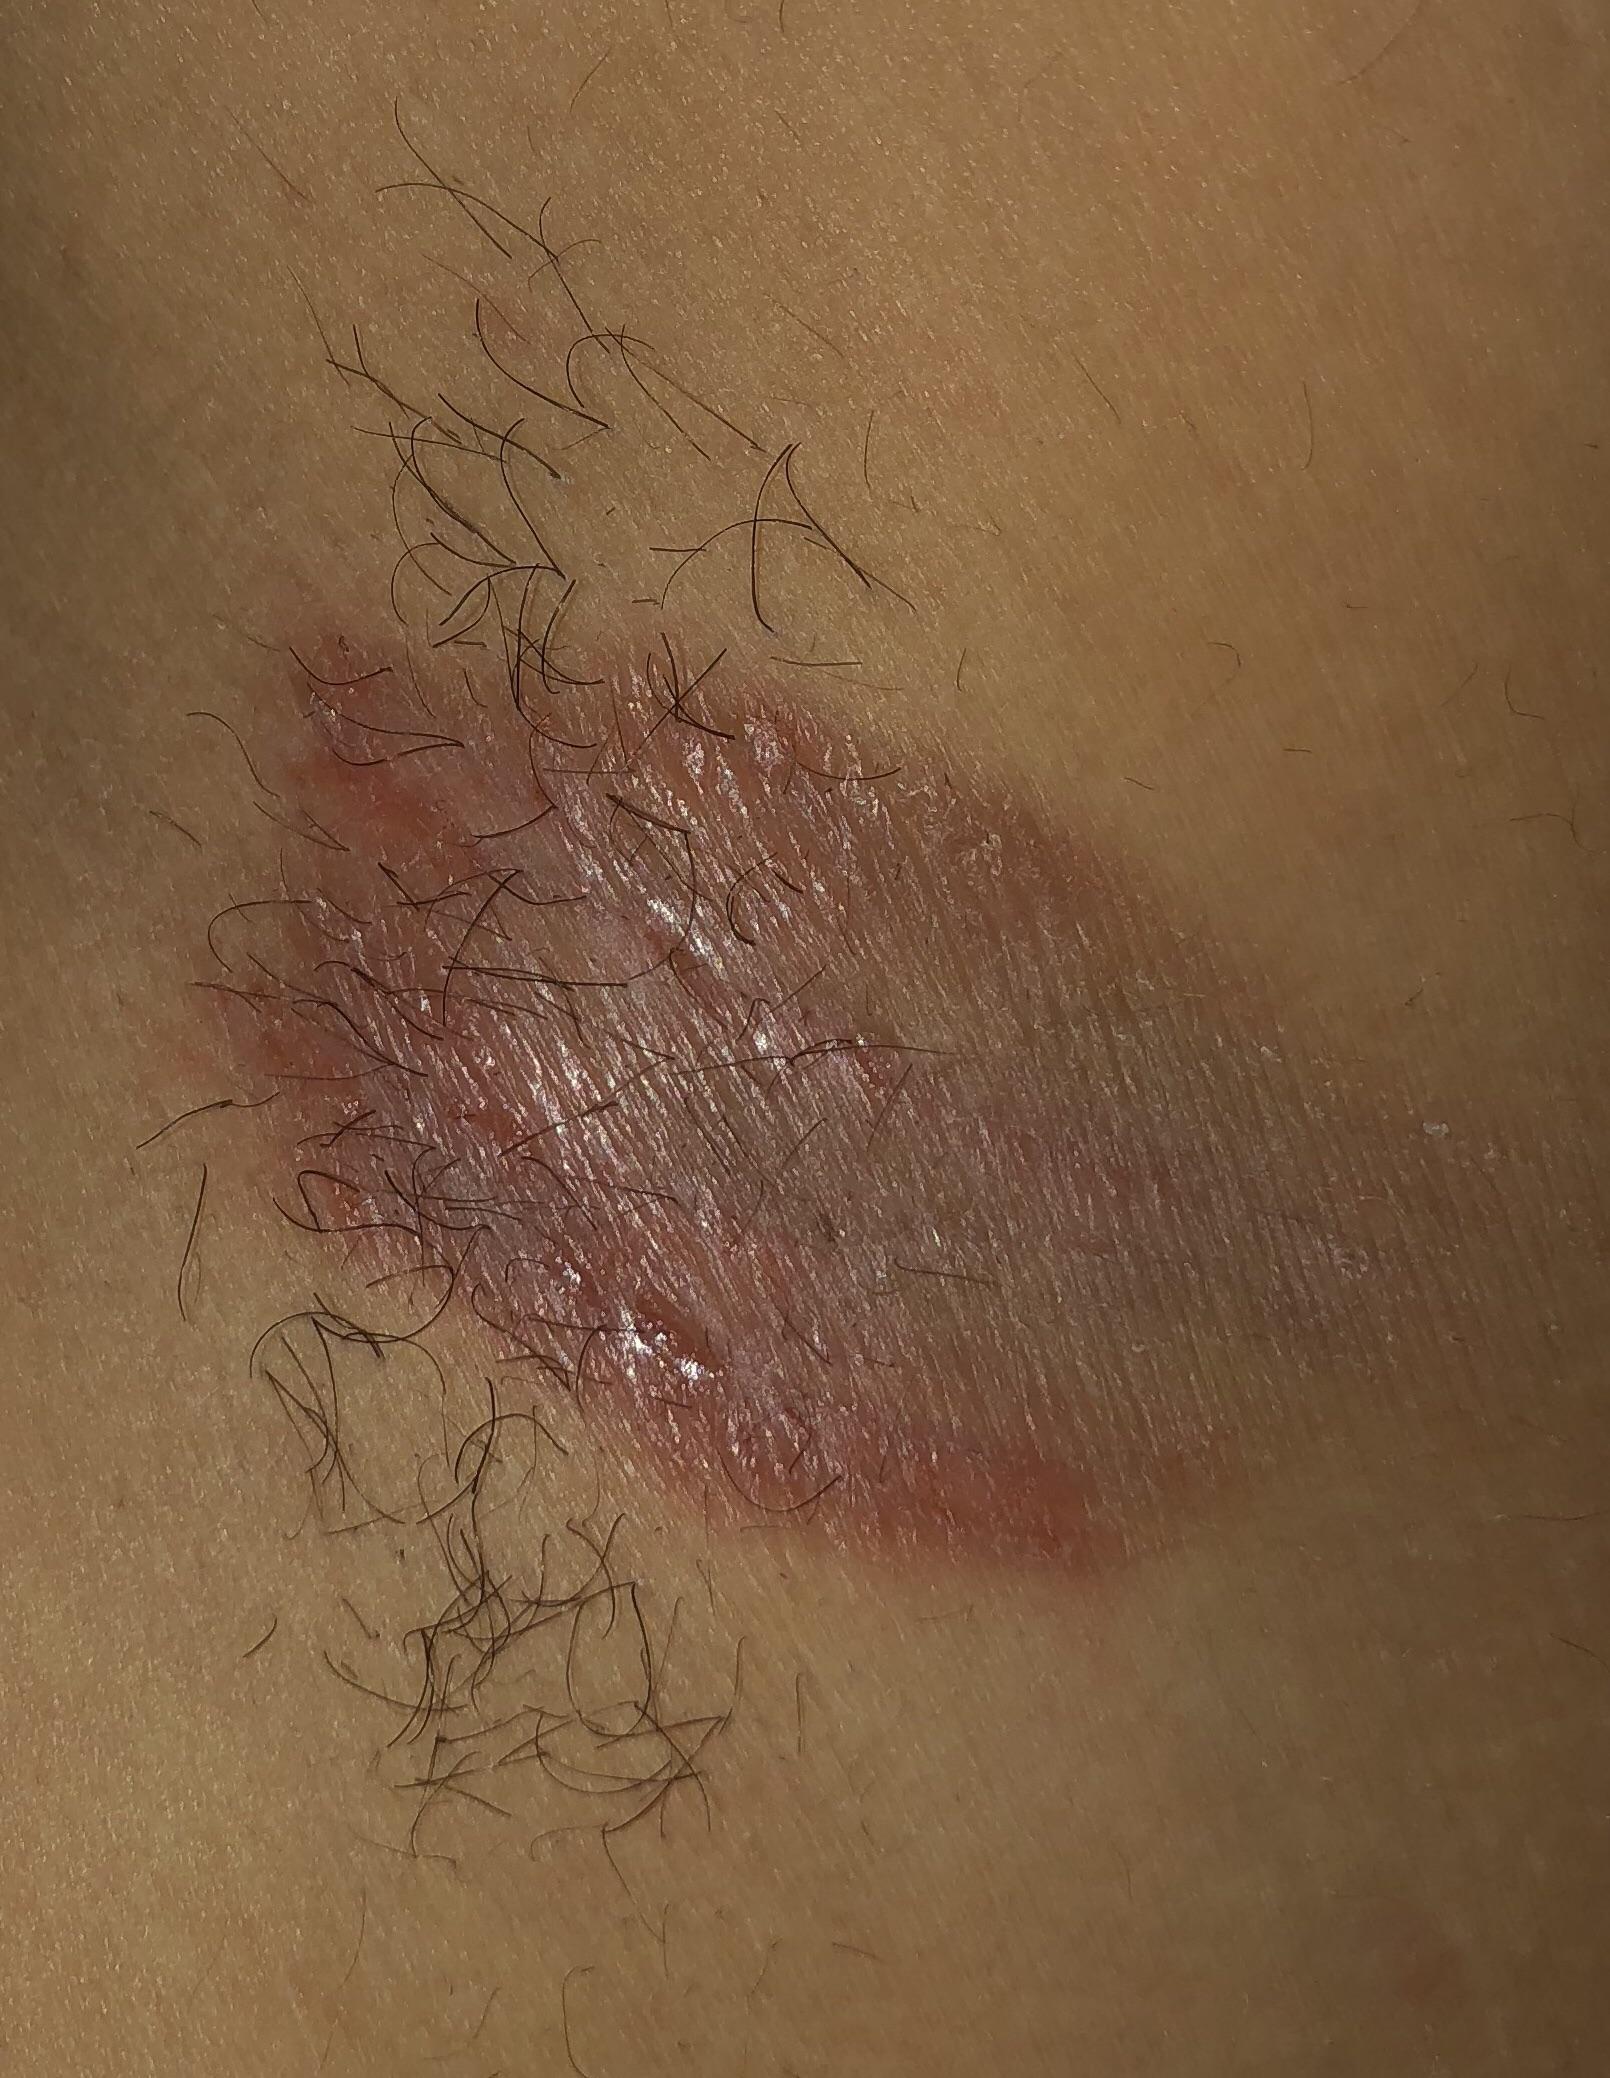 Armpit rash is at its worse. I